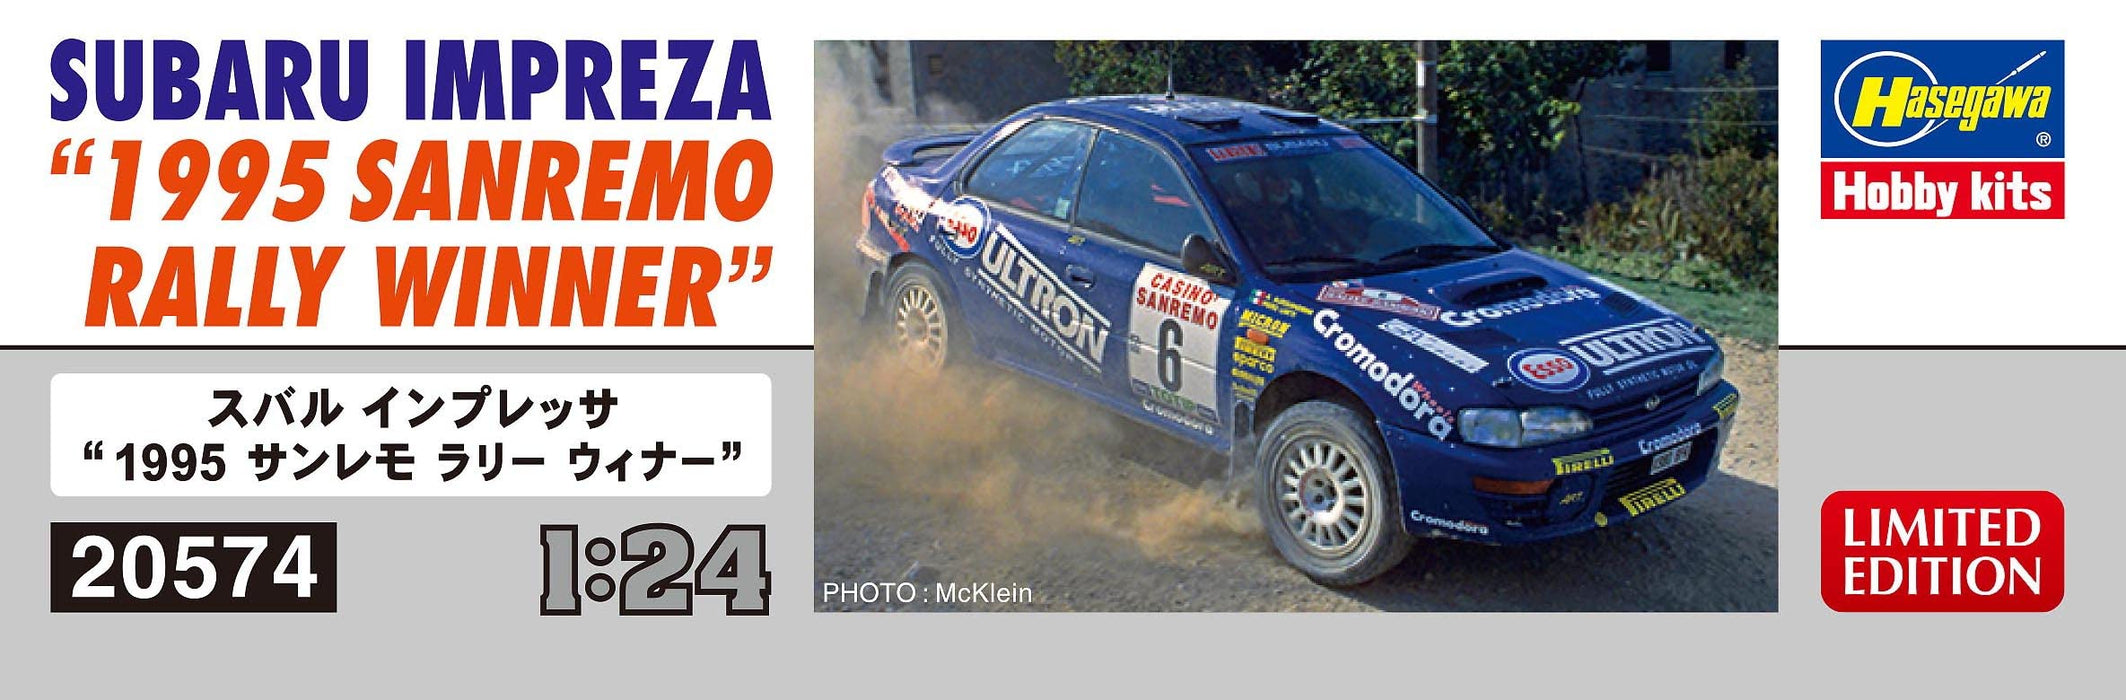 HASEGAWA 1/24 Subaru Impreza 1995 Sanremo Rally Winner Plastikmodell